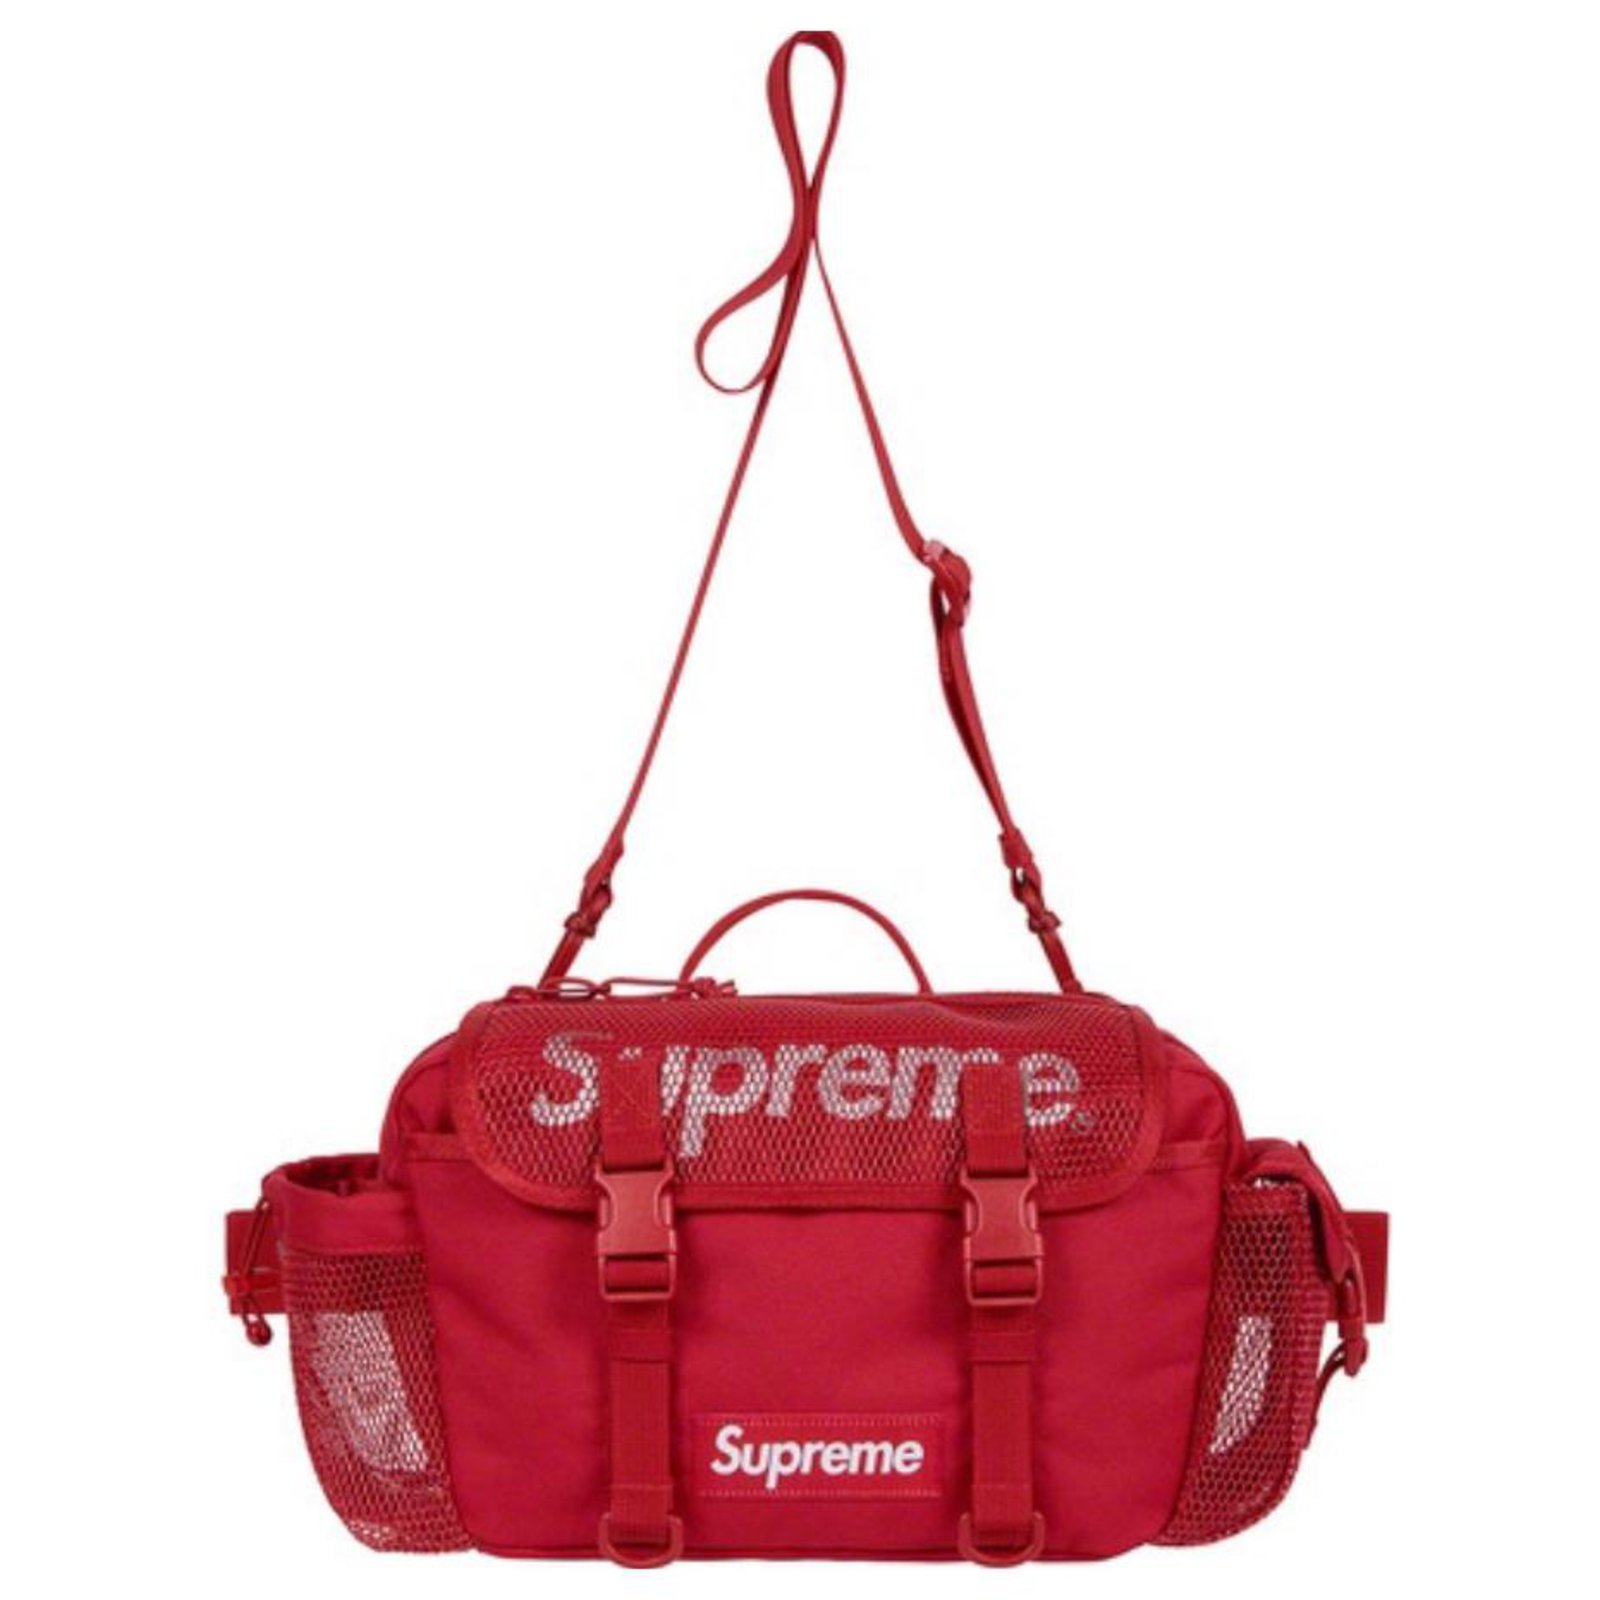 Сумка supreme. Сумка Supreme ss20. Supreme Shoulder Bag ss20. Supreme Waist Bag ss20. Сумка Supreme Shoulder Bag Red.